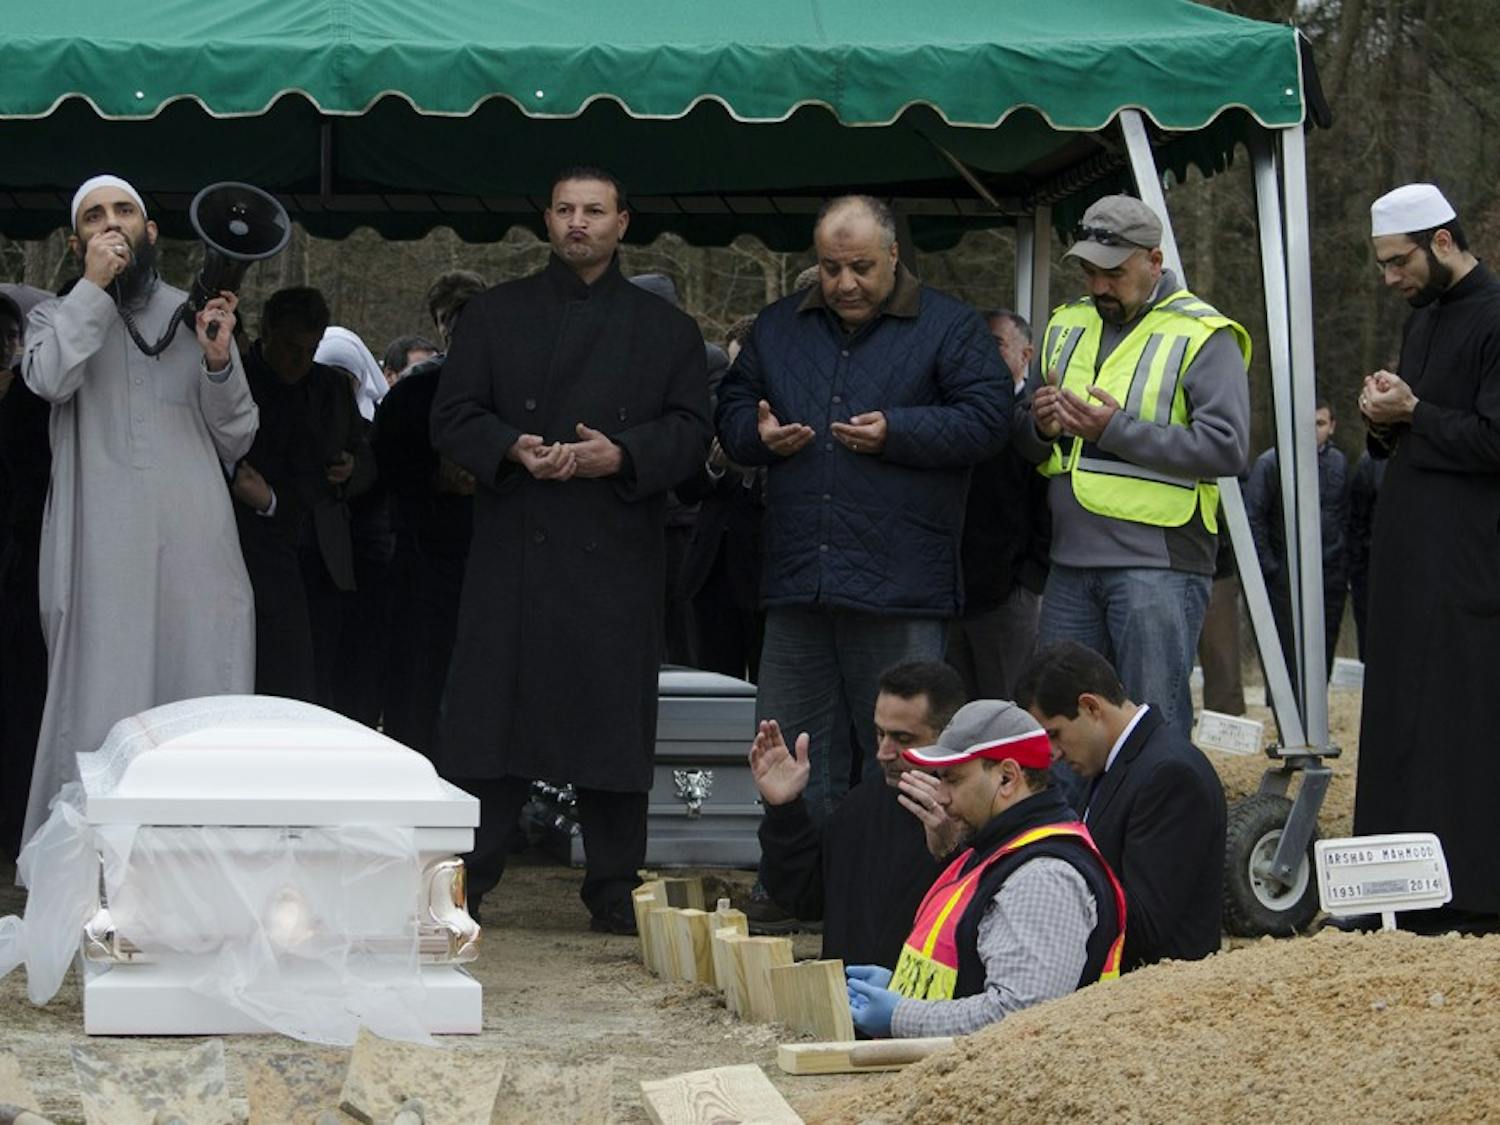 Funeral for Deah, Yosur. Razan